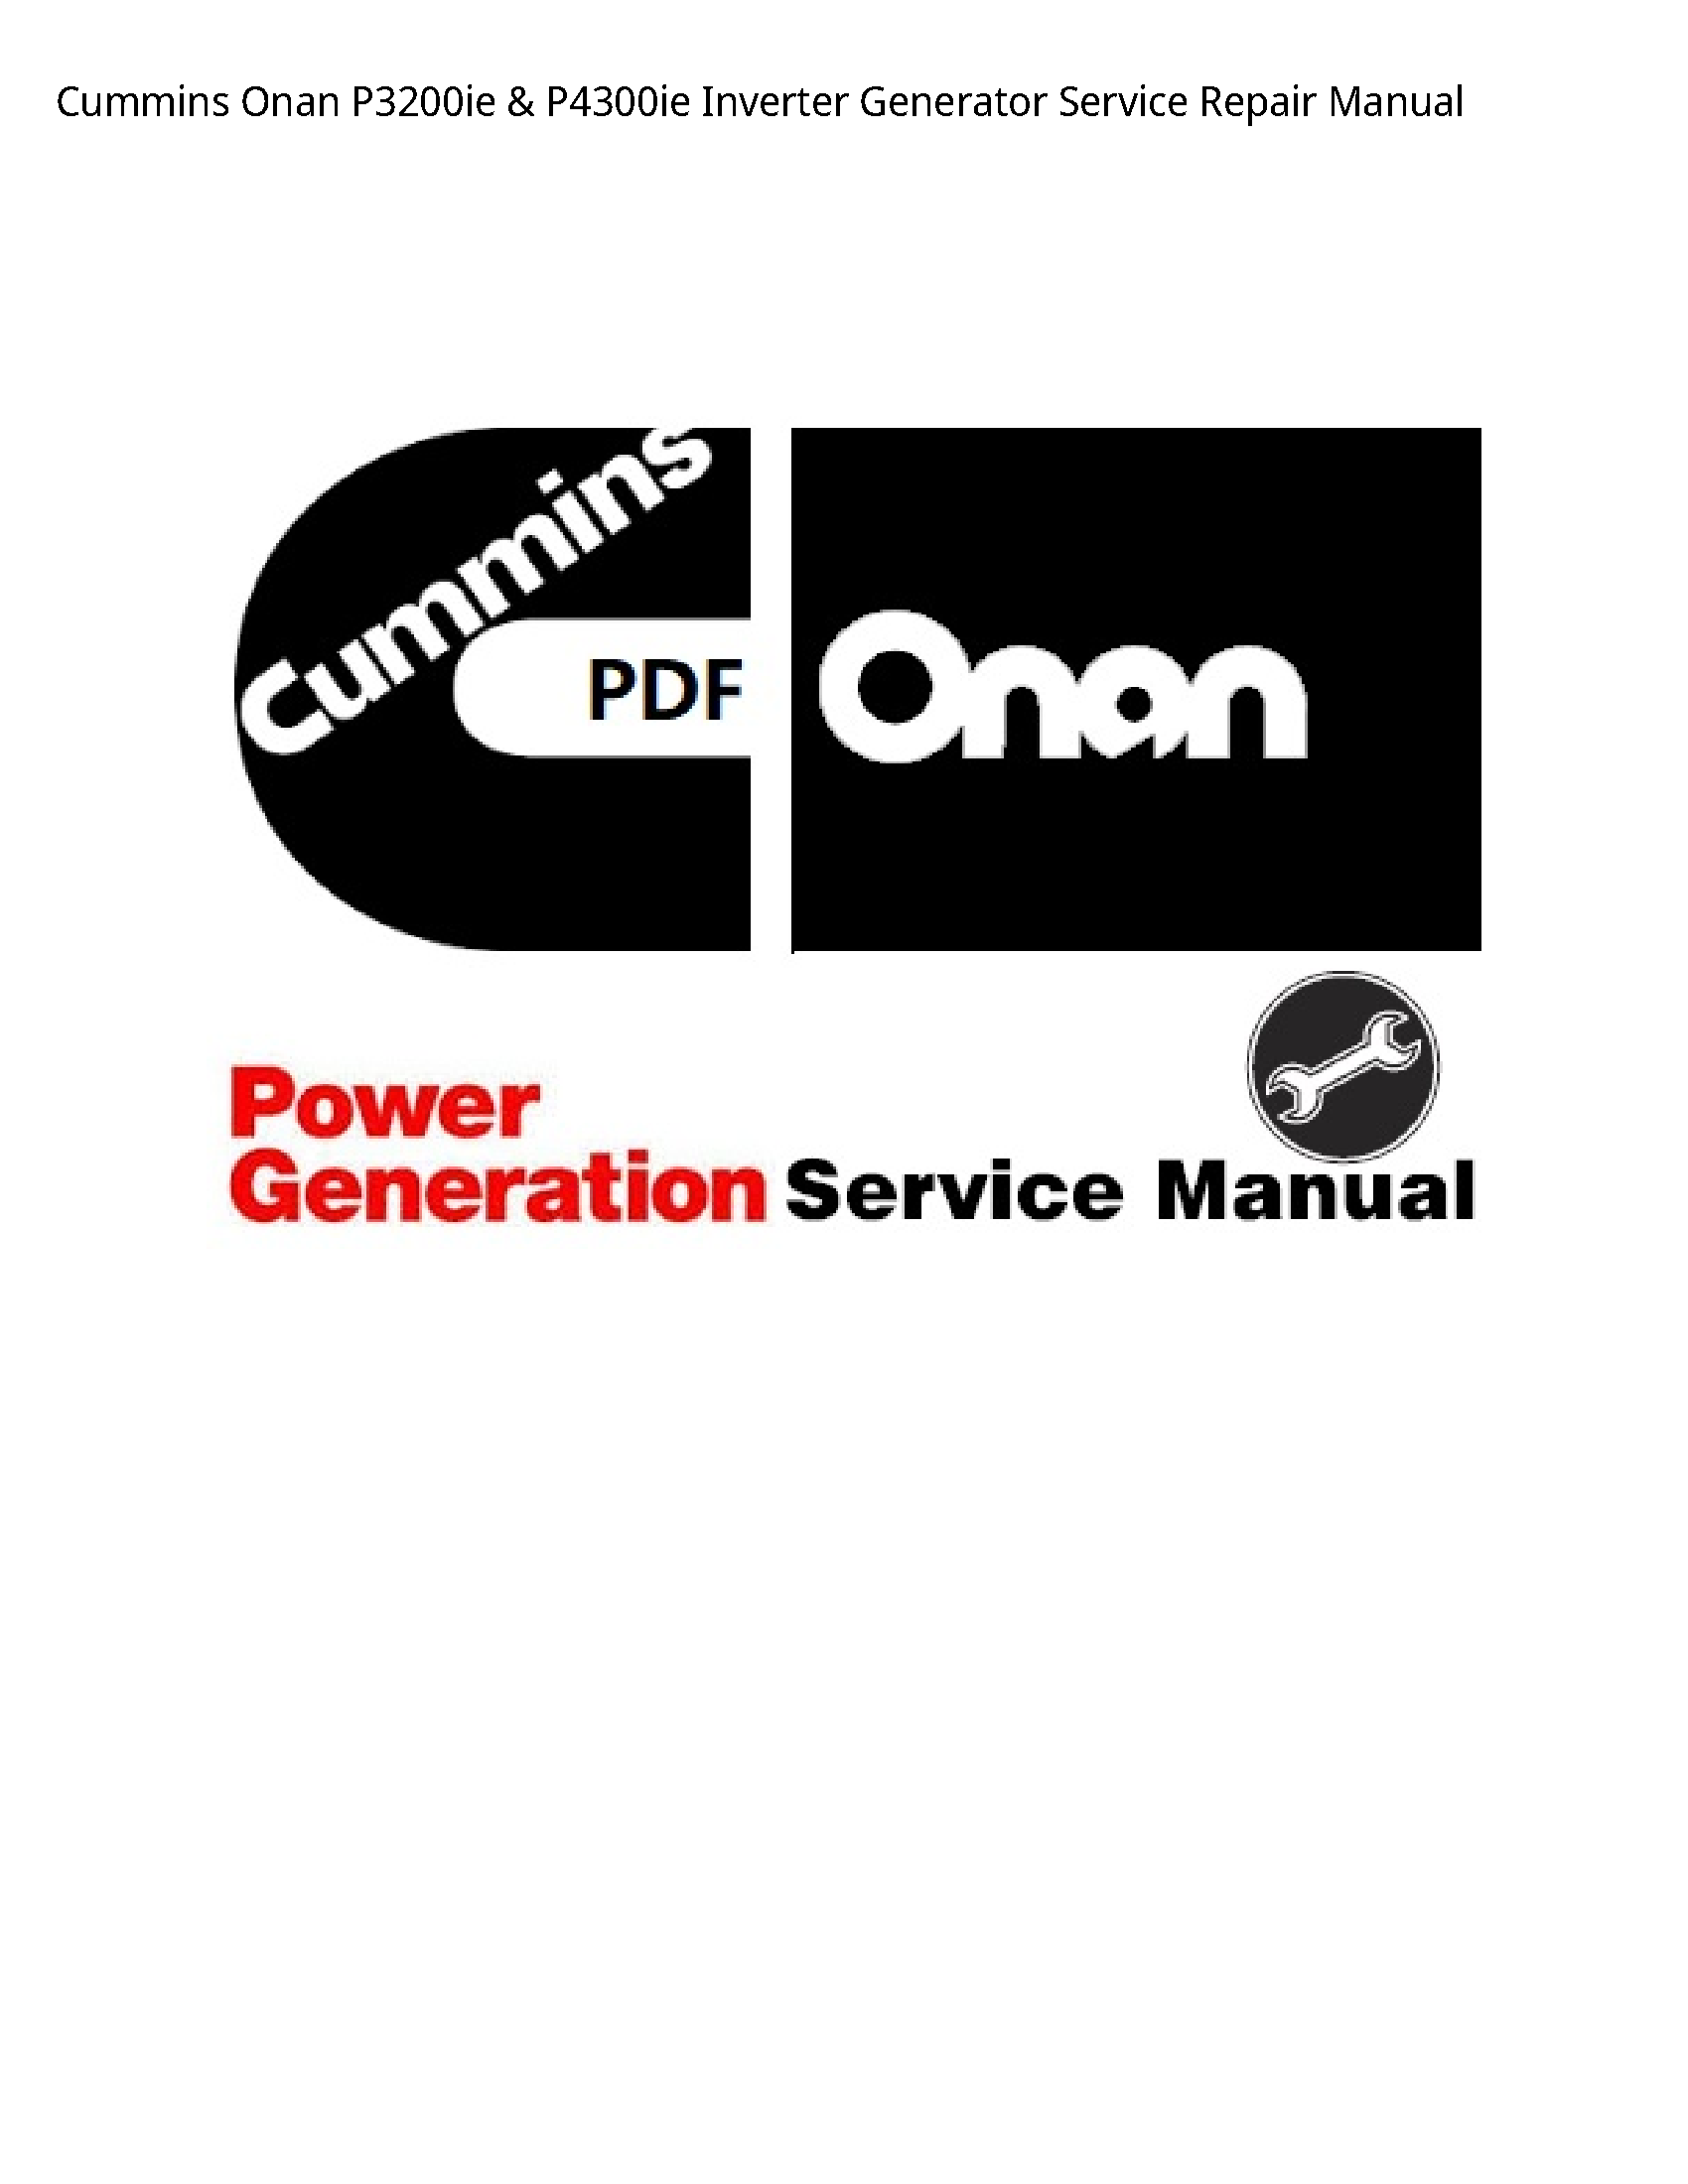 Cummins P3200ie Onan Inverter Generator manual